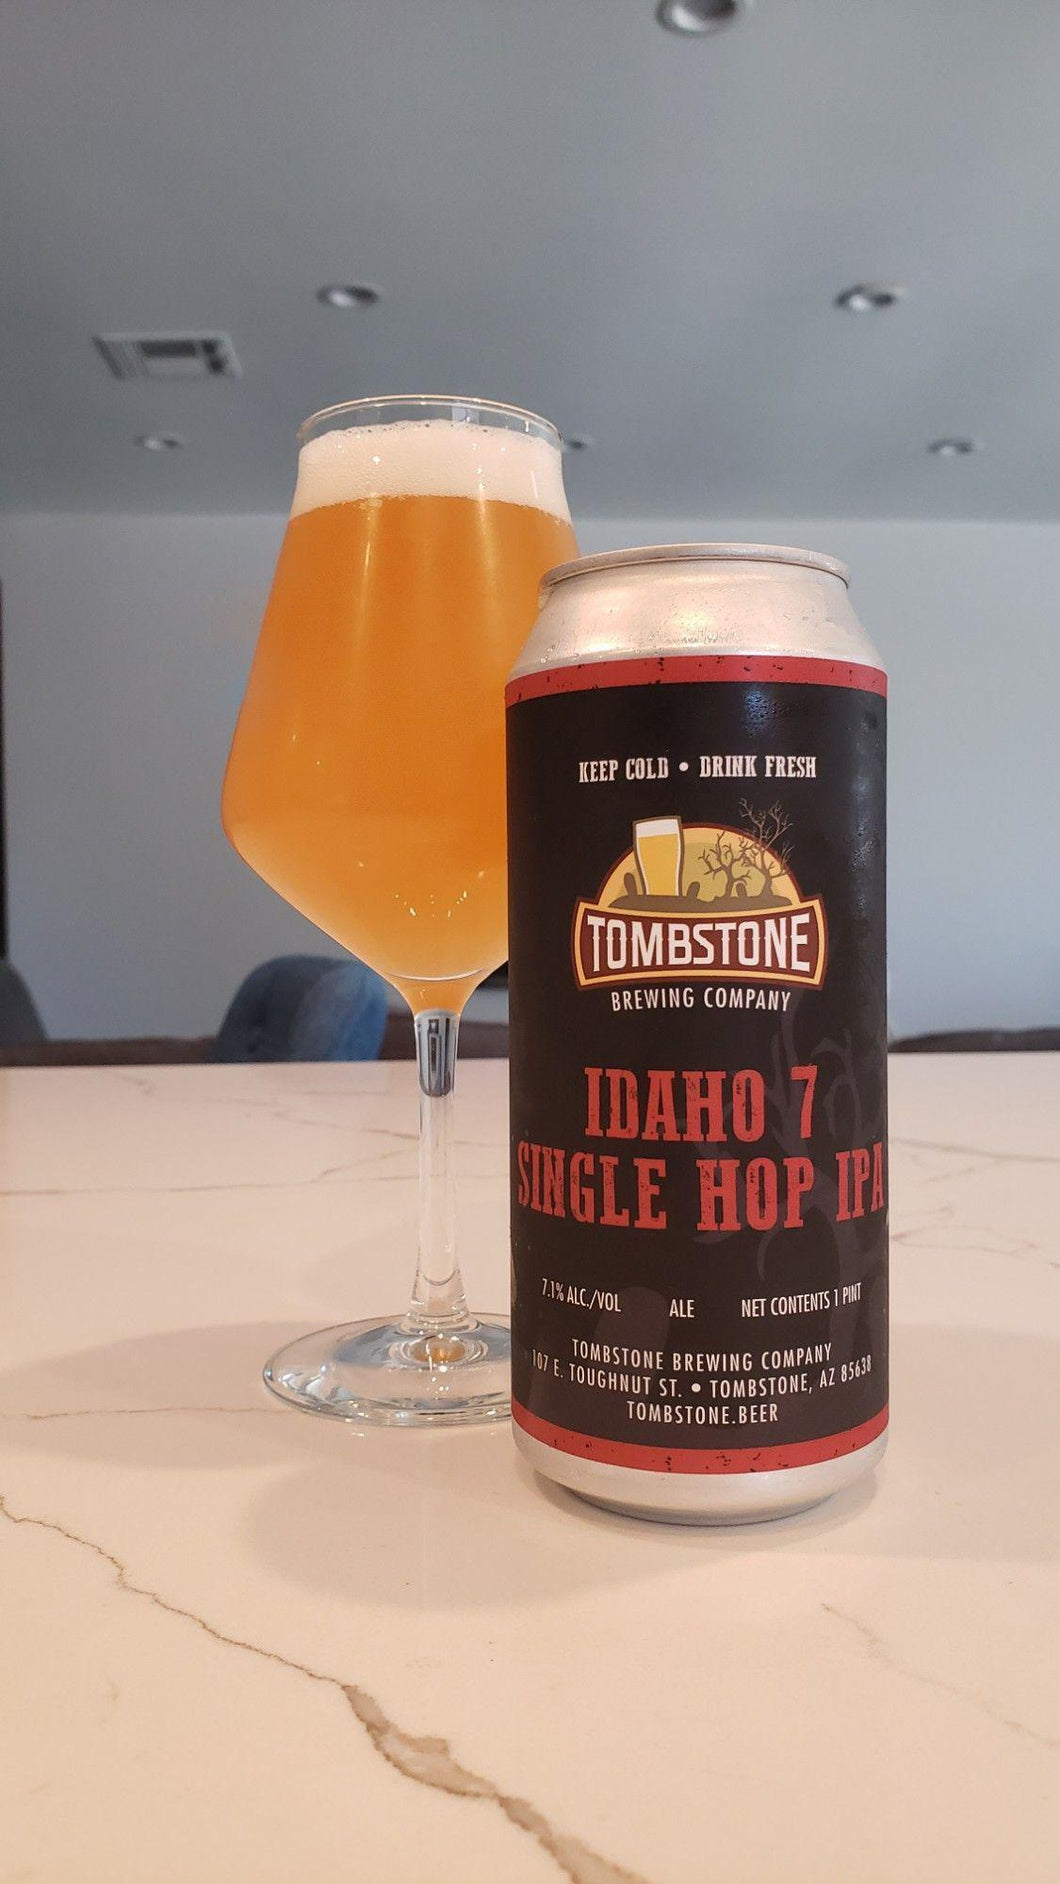 Idaho 7 Single Hop IPA - Tombstone Brewing co - 16 oz can